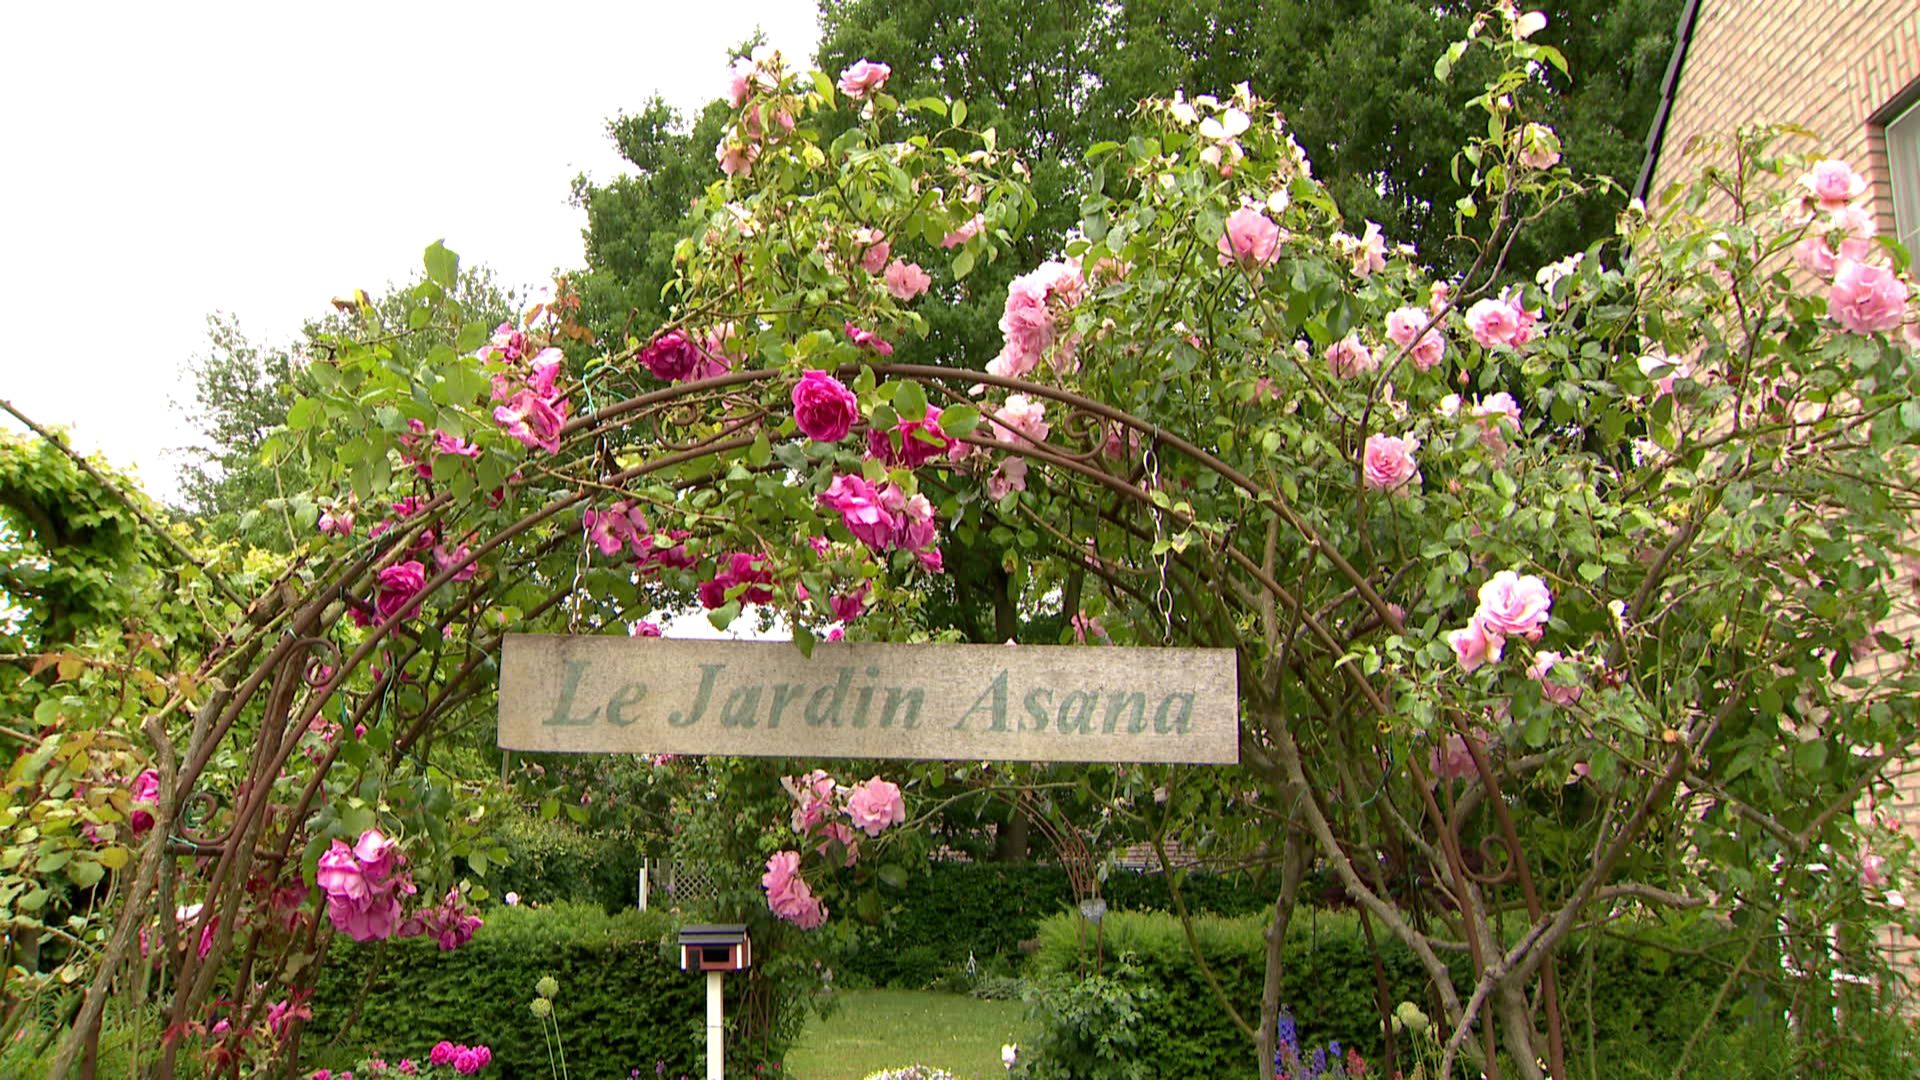 Le jardin Asana